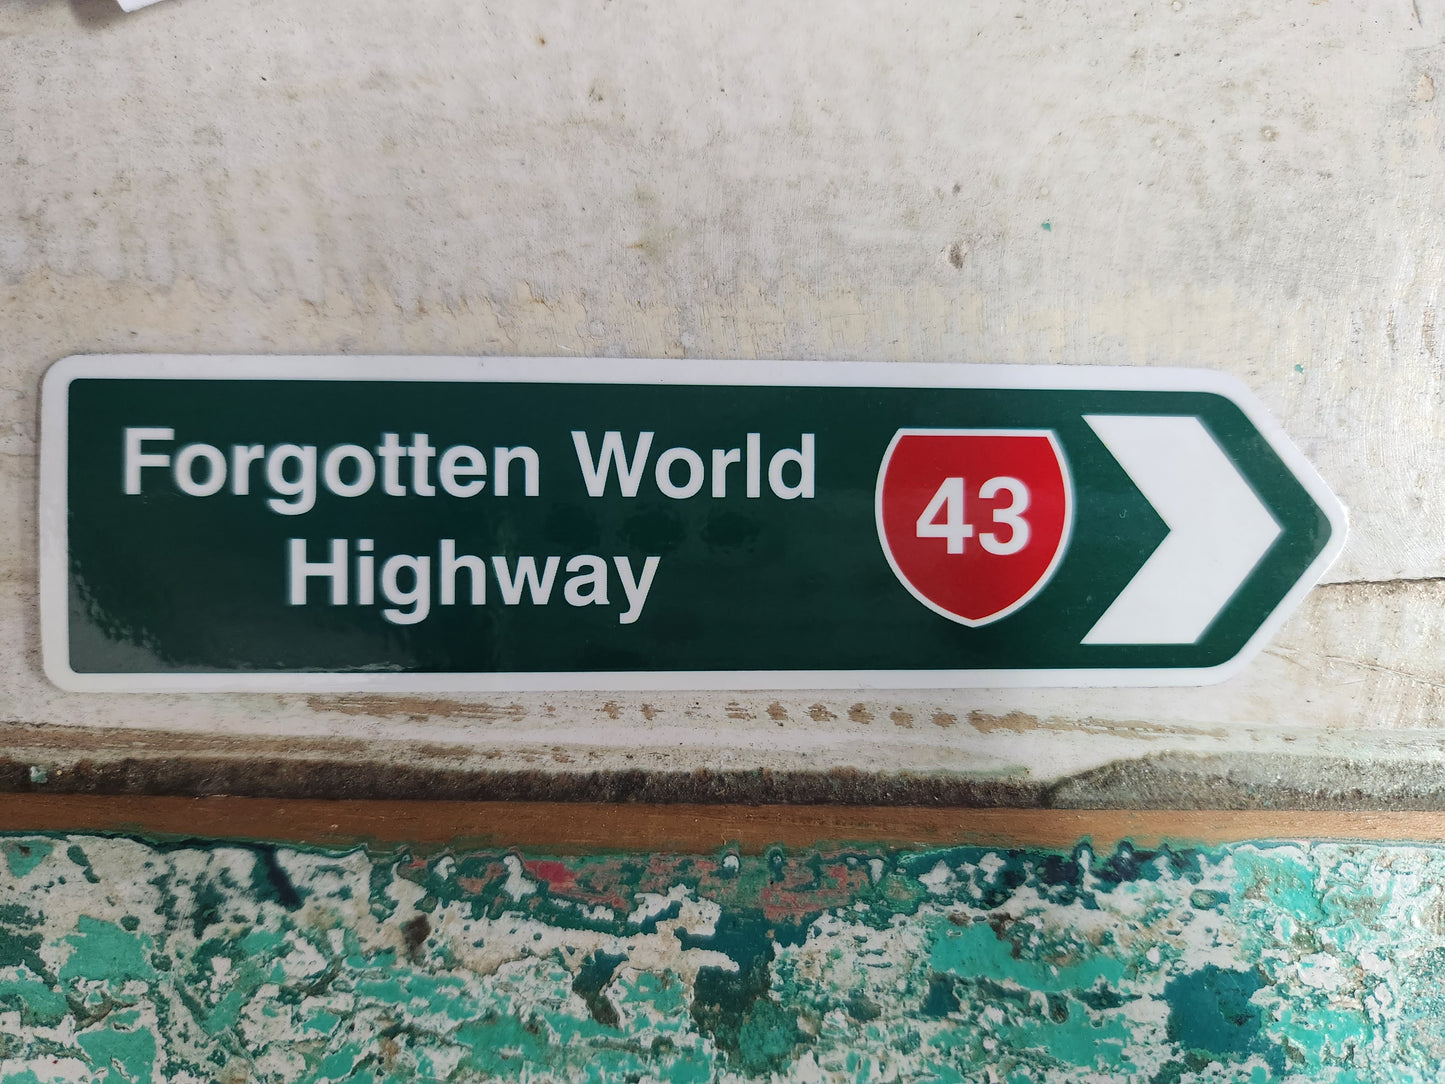 Magnet Road Signs - Forgotten World Highway